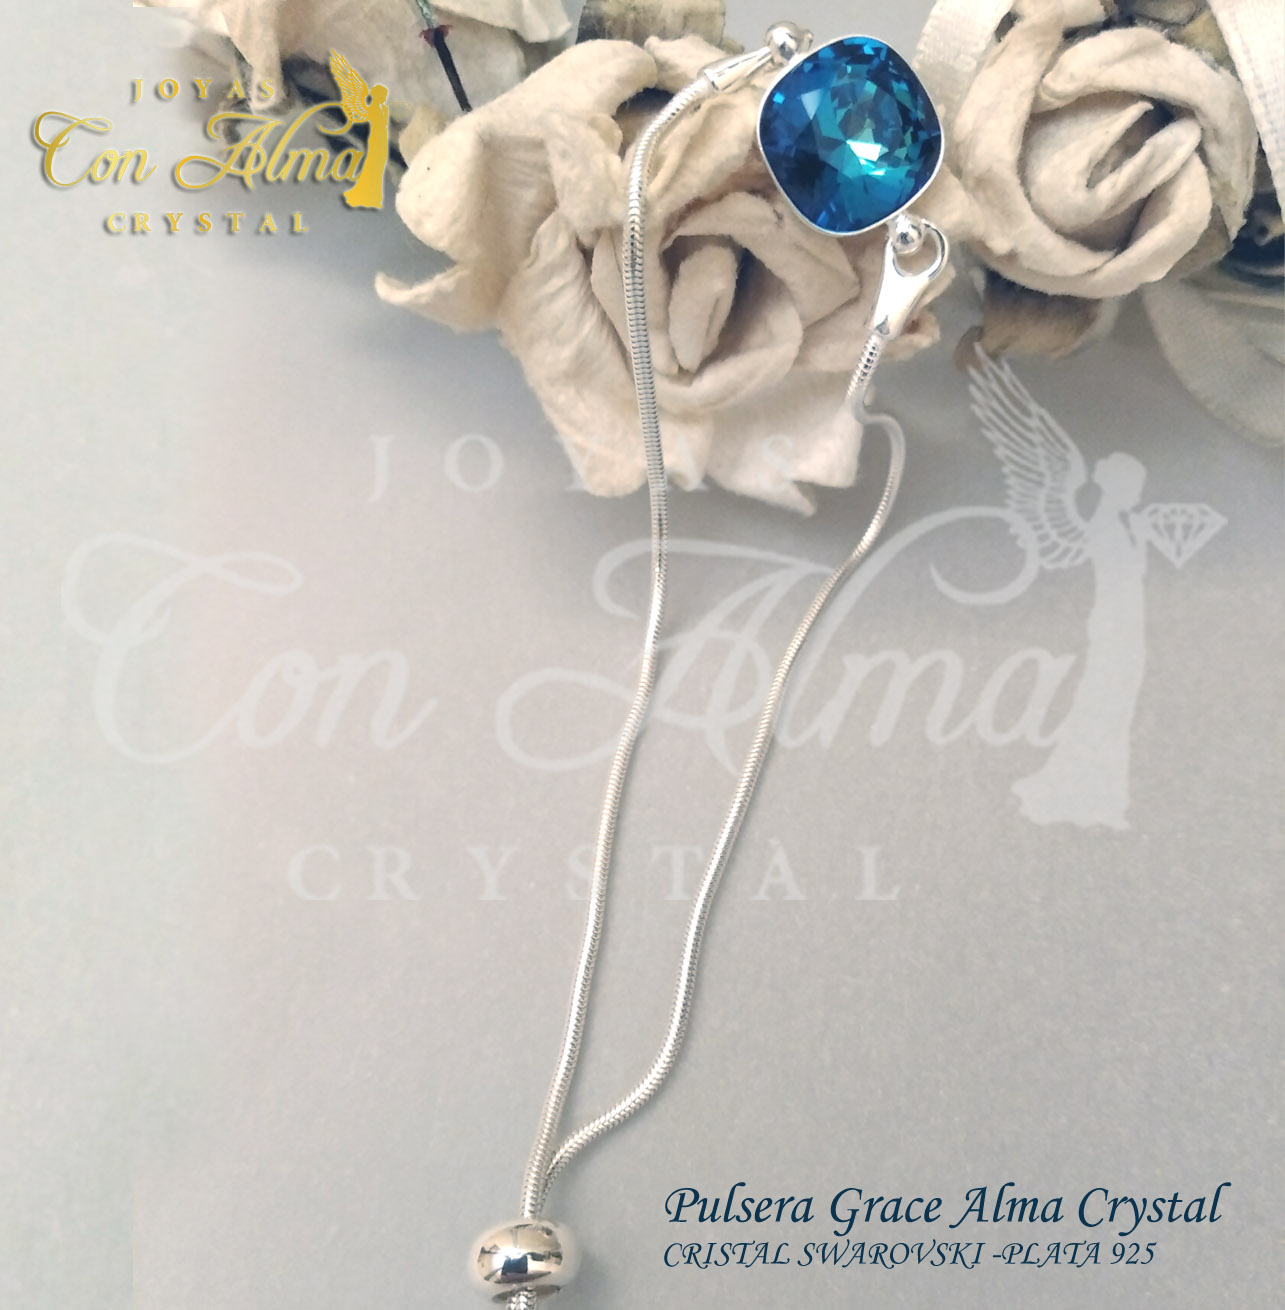 Pulsera Grace Alma Crystal  27 €